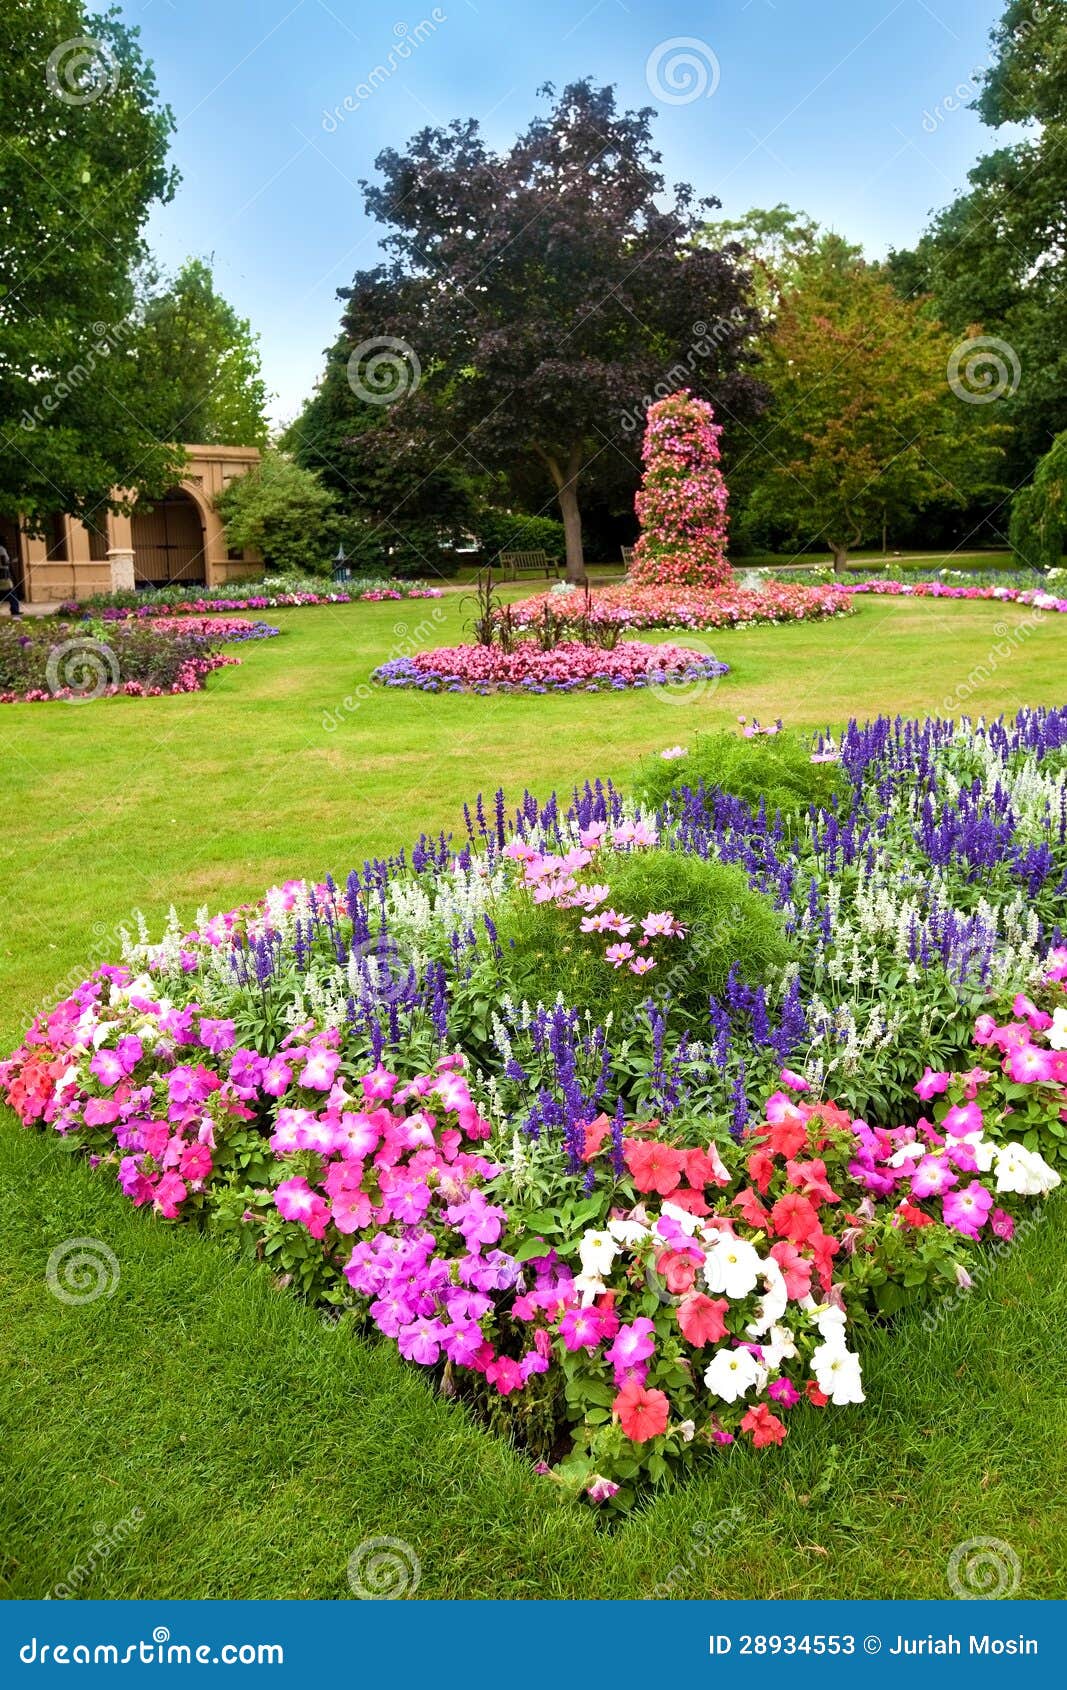 manicured flower garden with colorful azaleas.